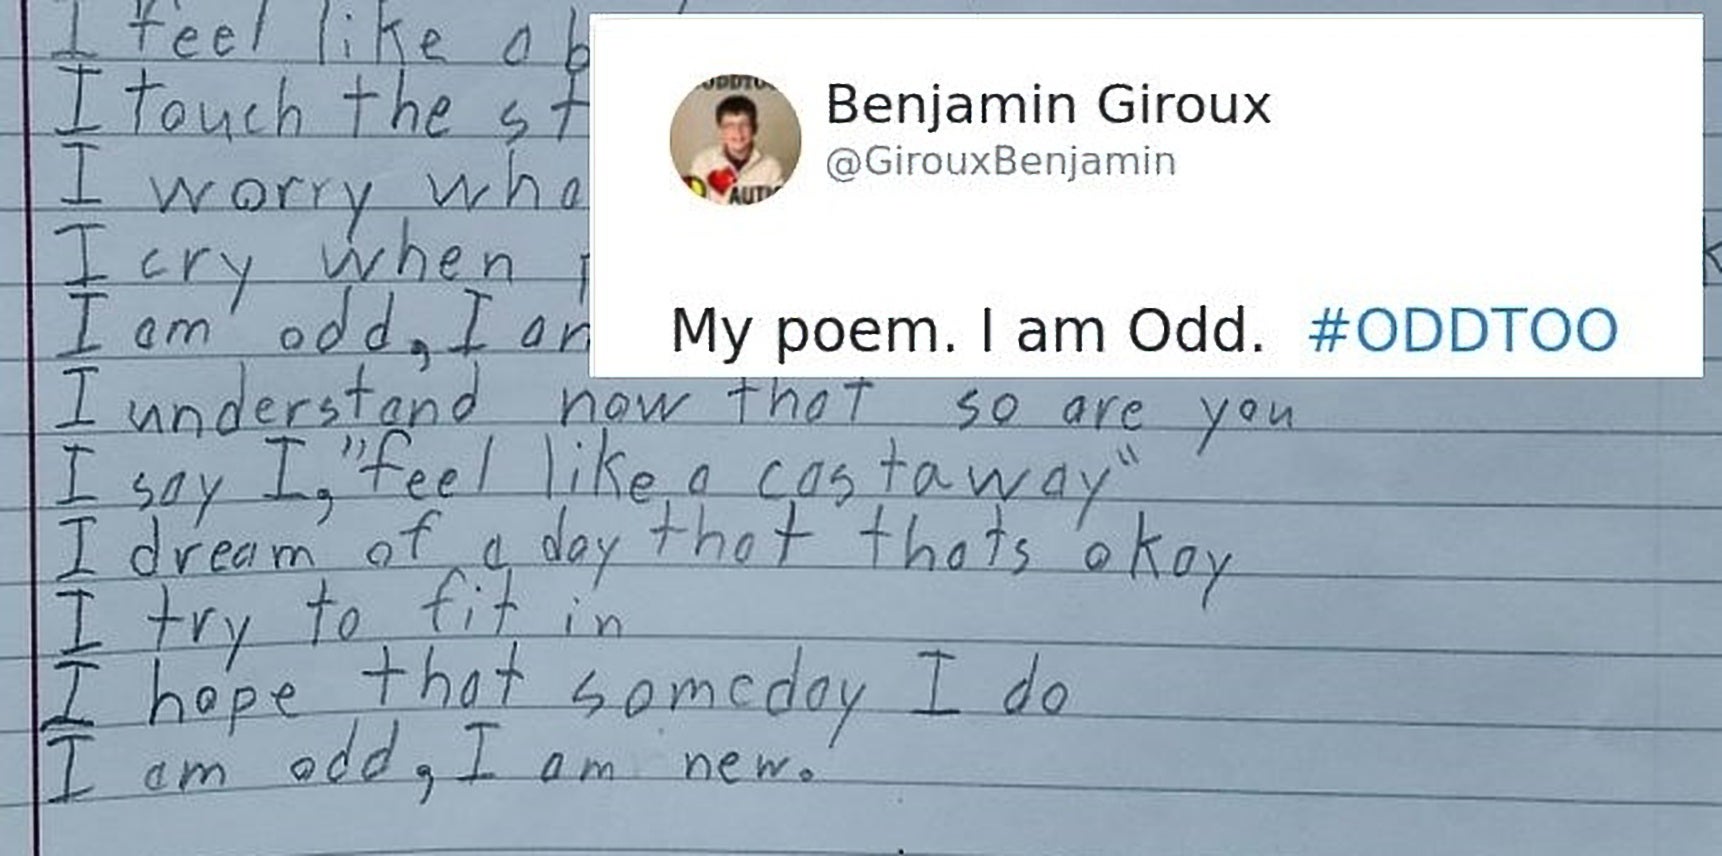 I Am Odd, I Am New by Benjamin Giroux